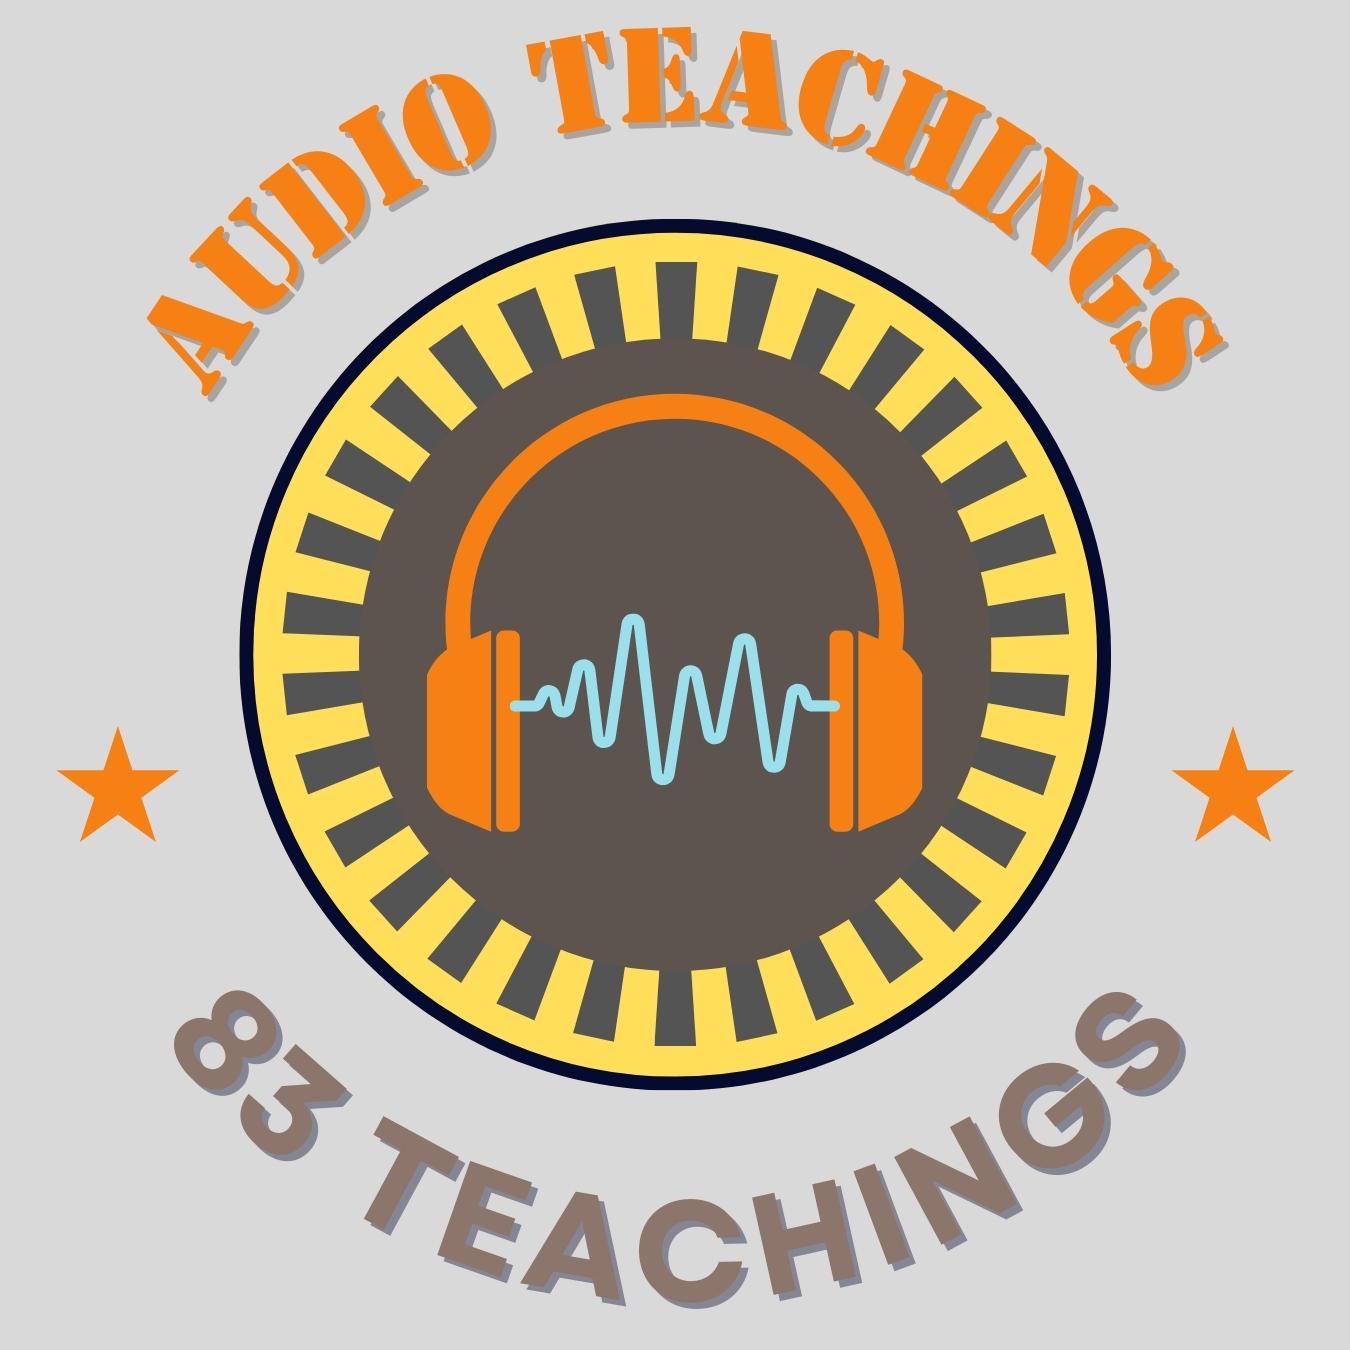 All Audio Teachings